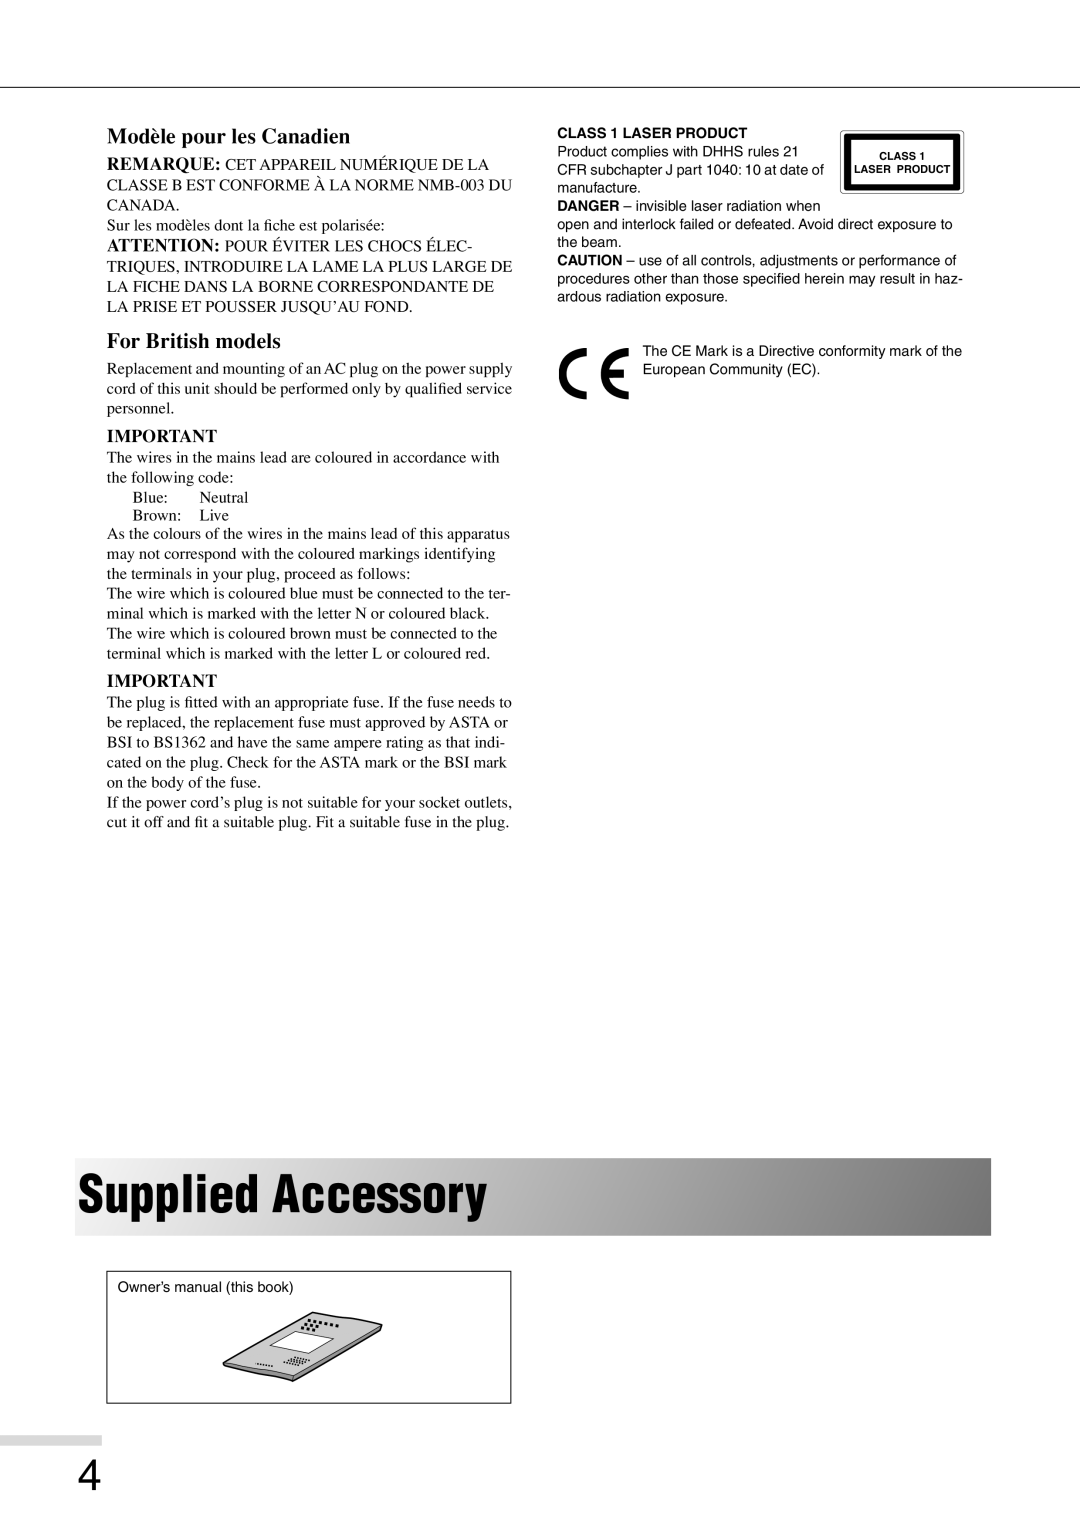 Eiki 8080 owner manual Supplied Accessory, Modèle pour les Canadien, For British models 